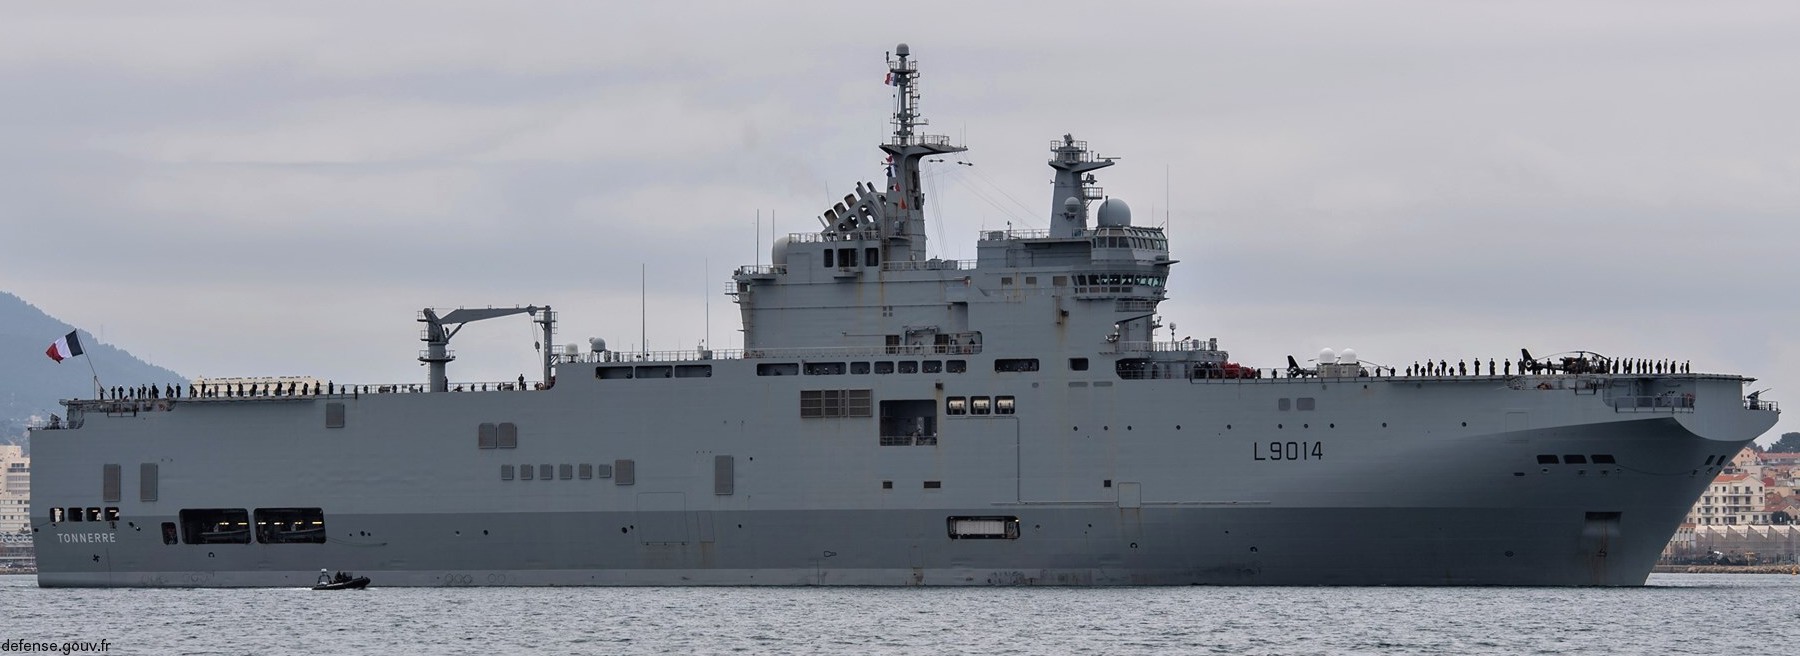 l-9014 fs tonnere mistral class amphibious assault command ship bpc french navy marine nationale 51